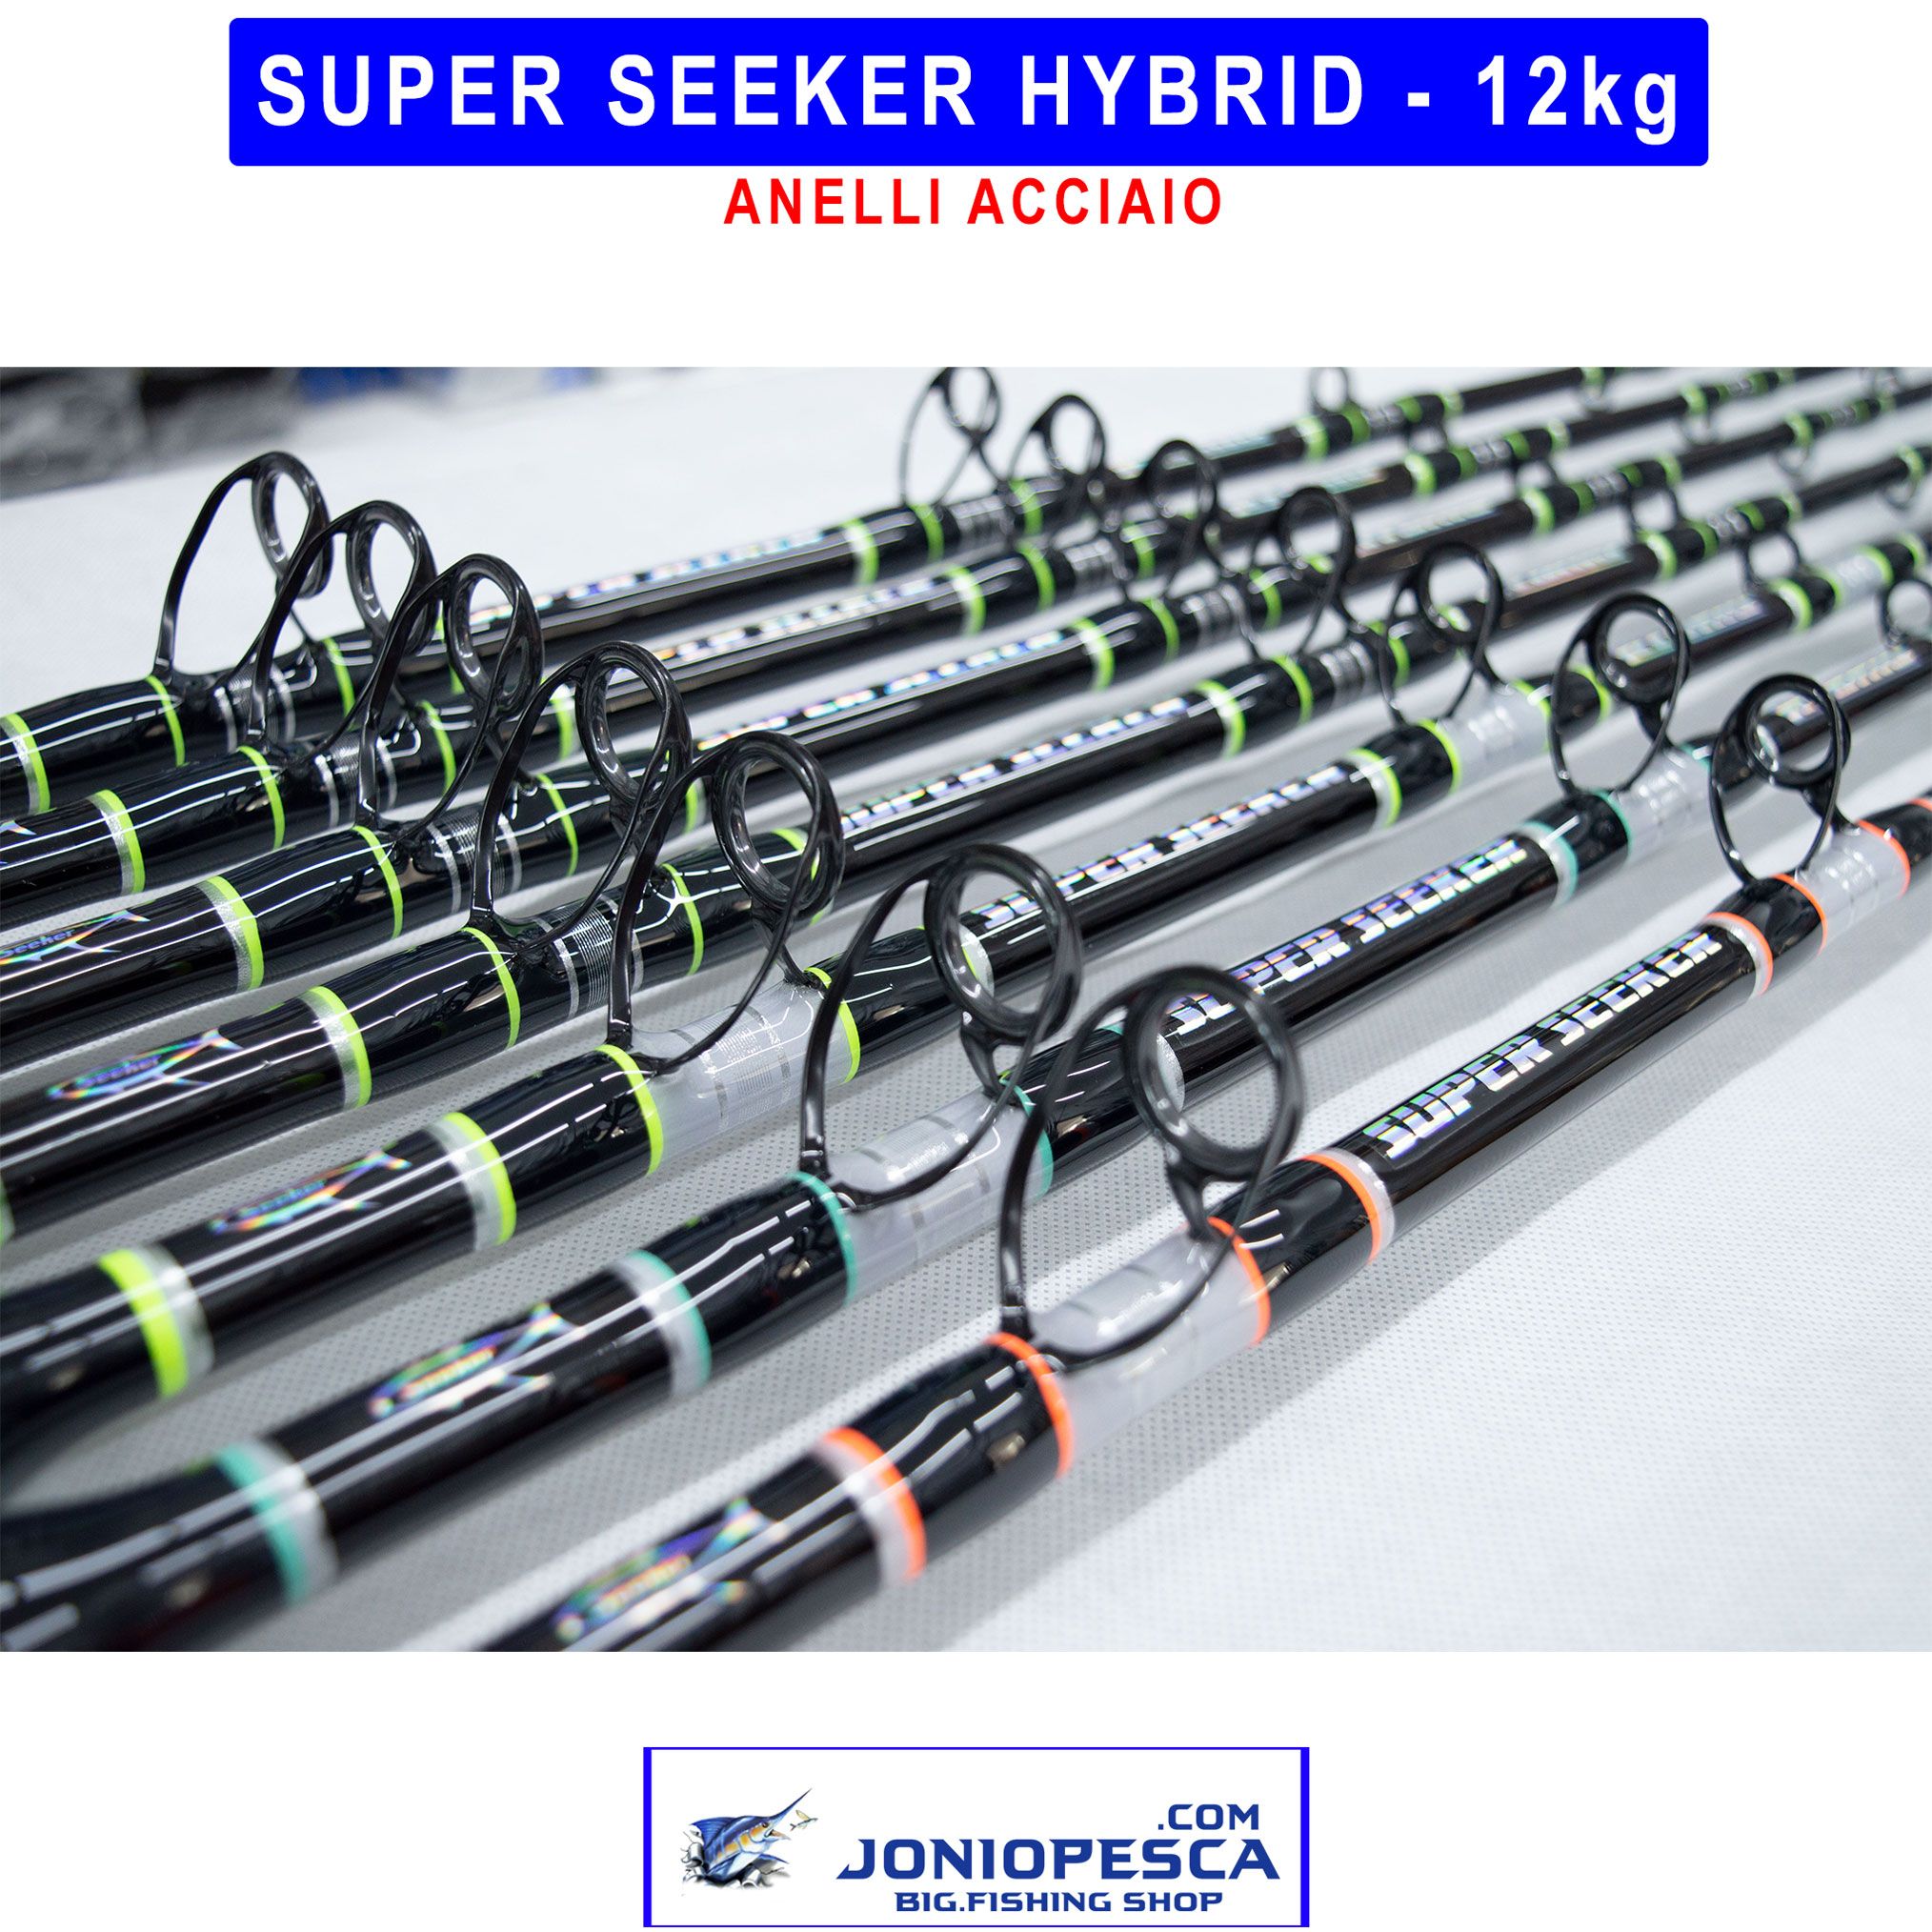 super-seeker-hybrid-12kg-anelli-acciaio-3